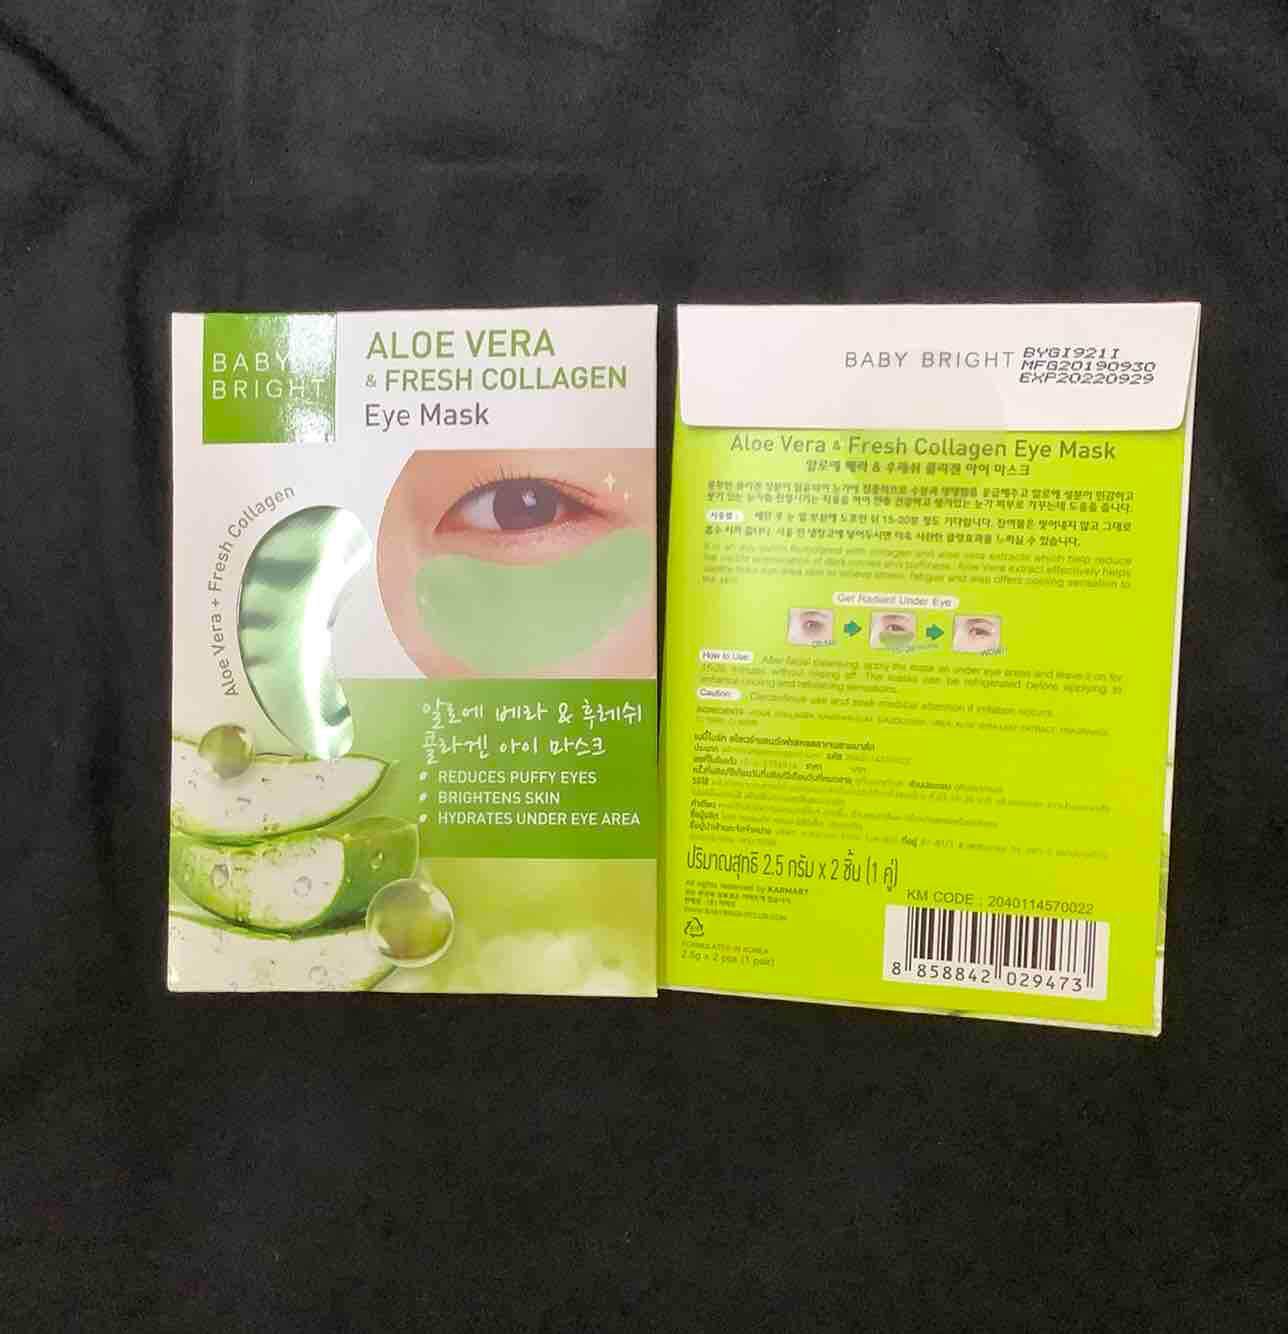 Baby Bright Aloe Vera & Fresh Collagen Eye Mask Baby Bright Aloe Vera & Fresh Collagen Eye Mask 1กล่องมี6คู่